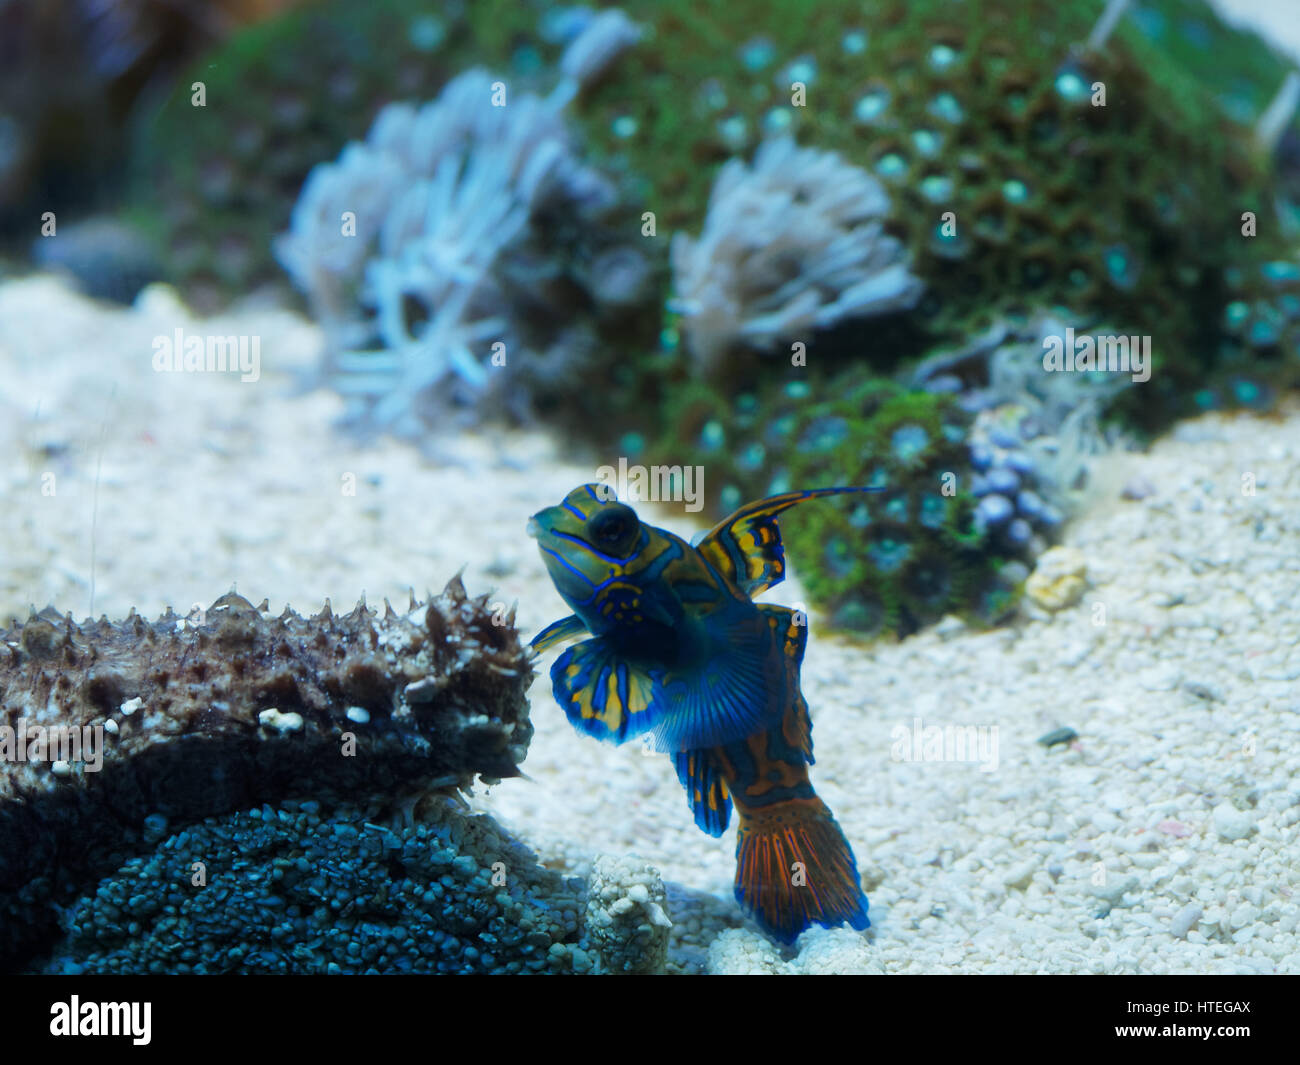 Mandarinfish or Mandarin Dragonet (Synchiropus splendidus) Stock Photo